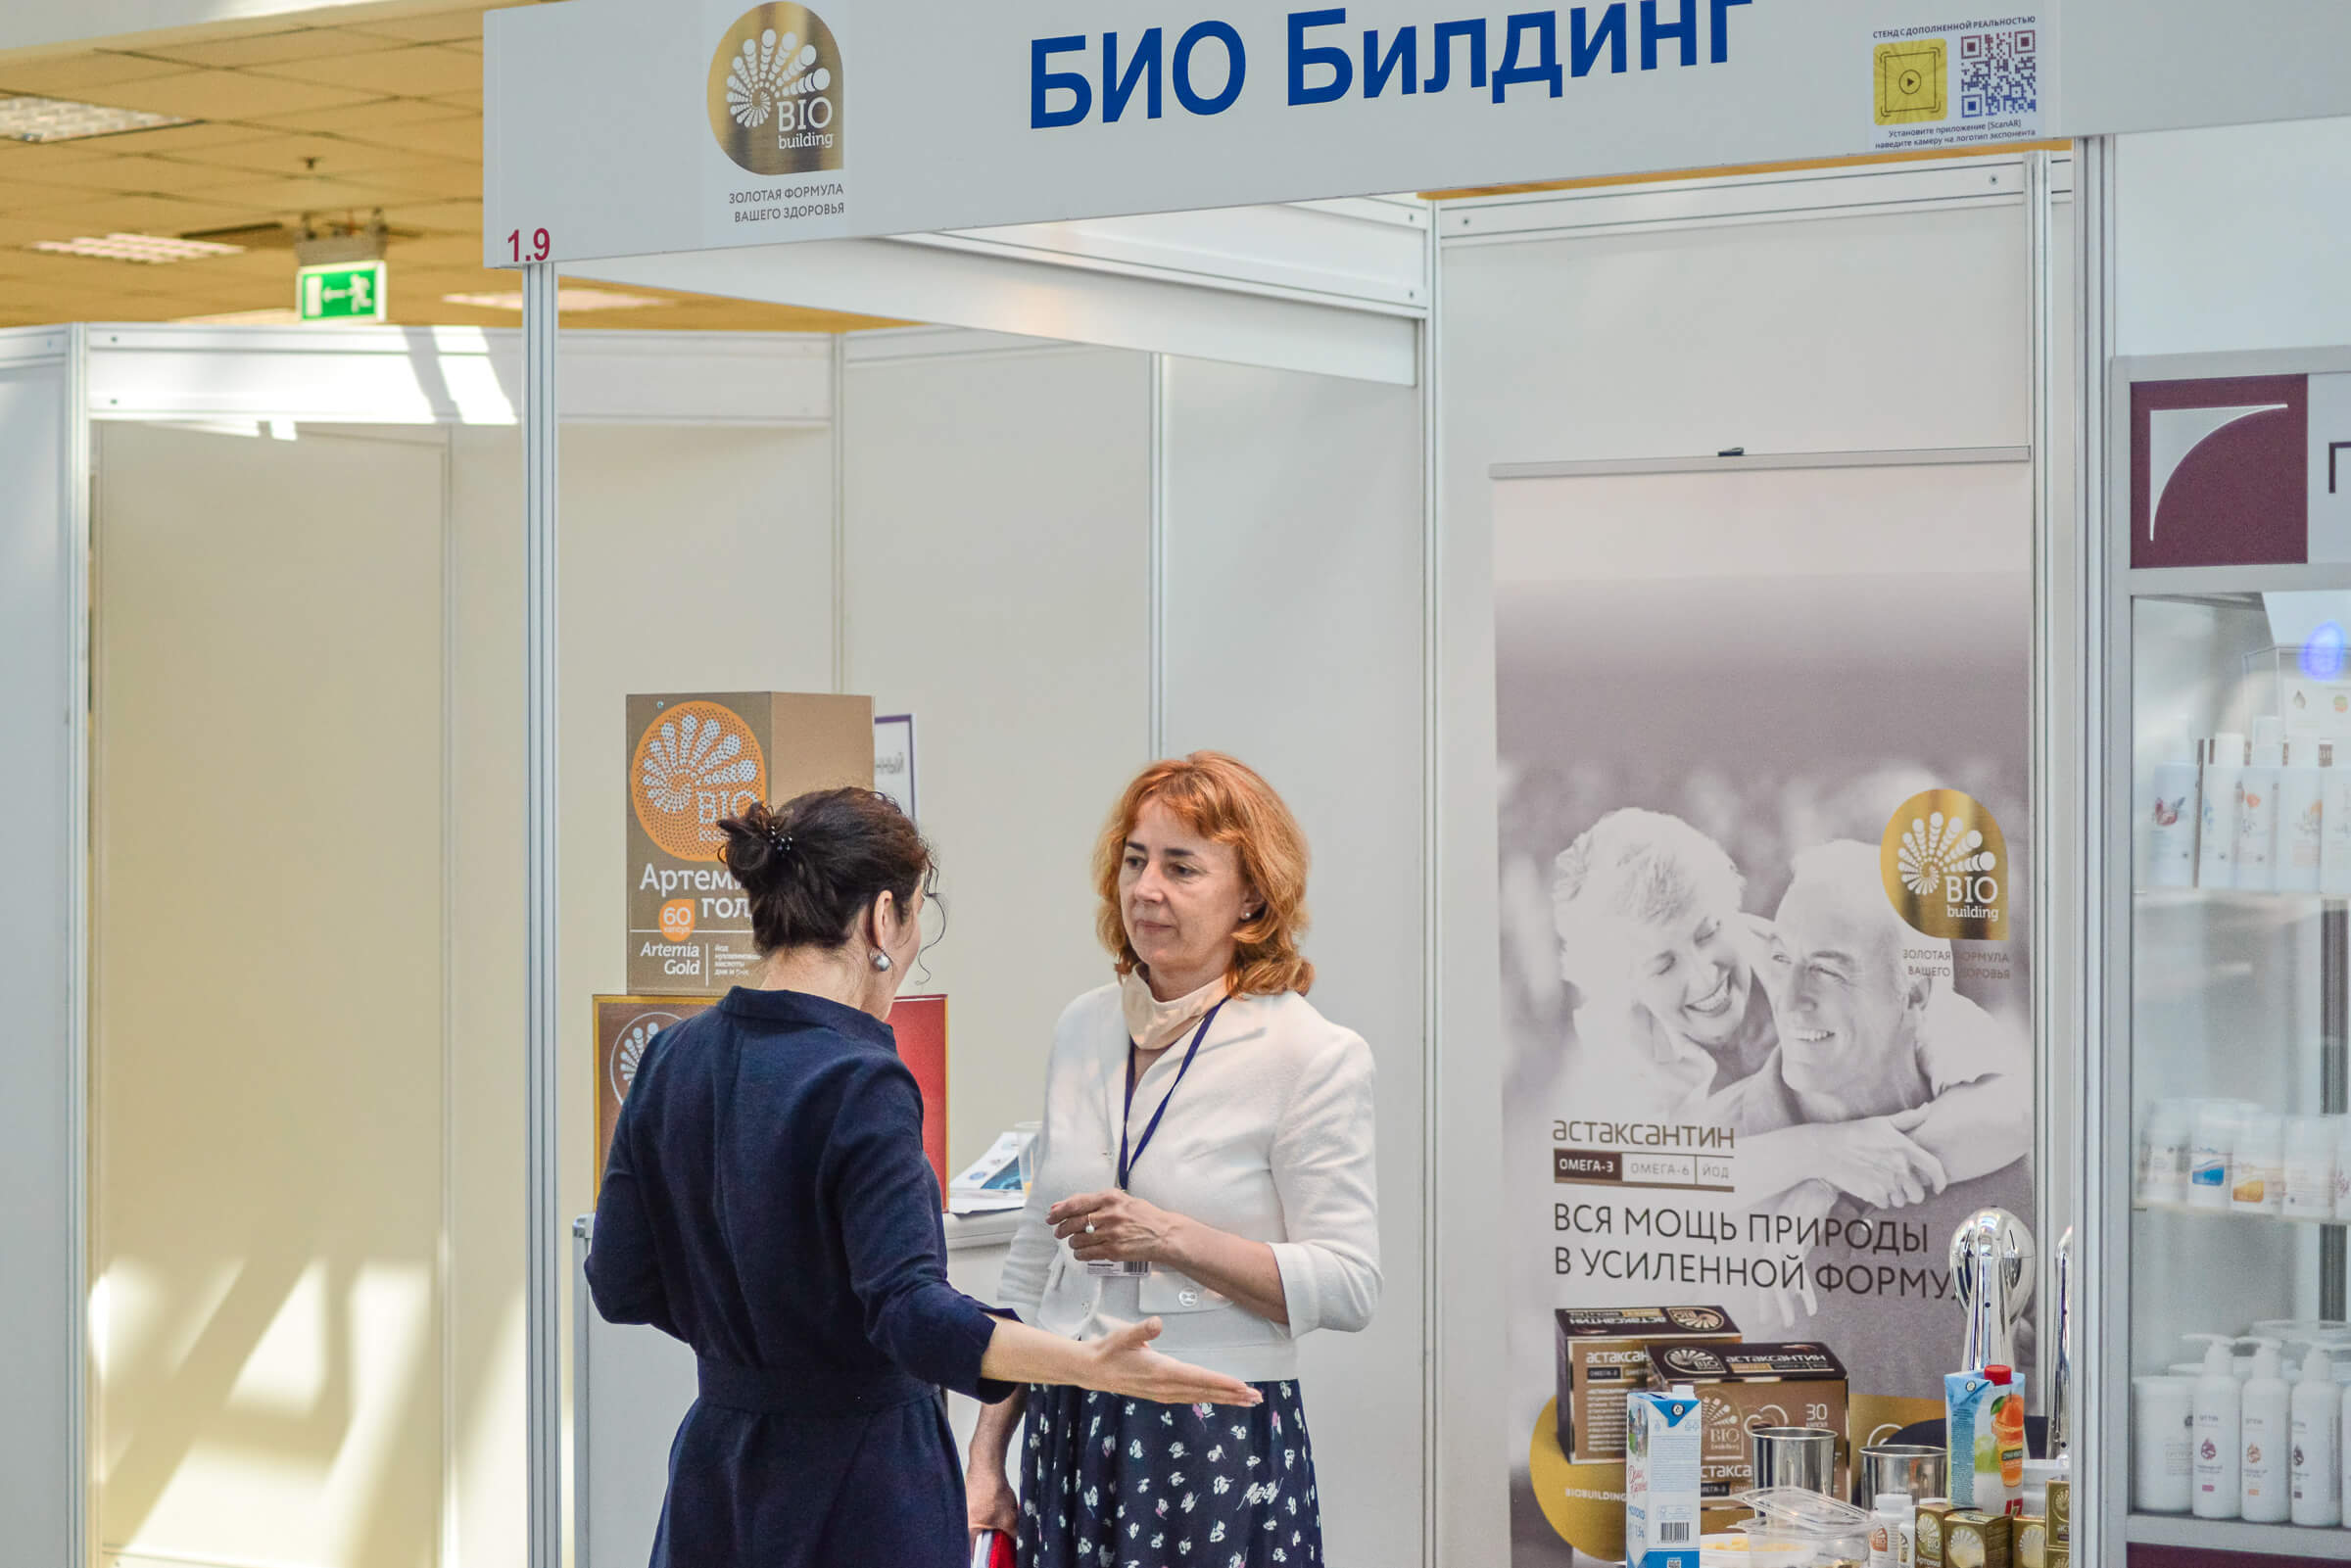 BIO Building - XX ANNIVERSARY ALL-RUSSIAN FORUM "ZDRAVNITSA - 2021"